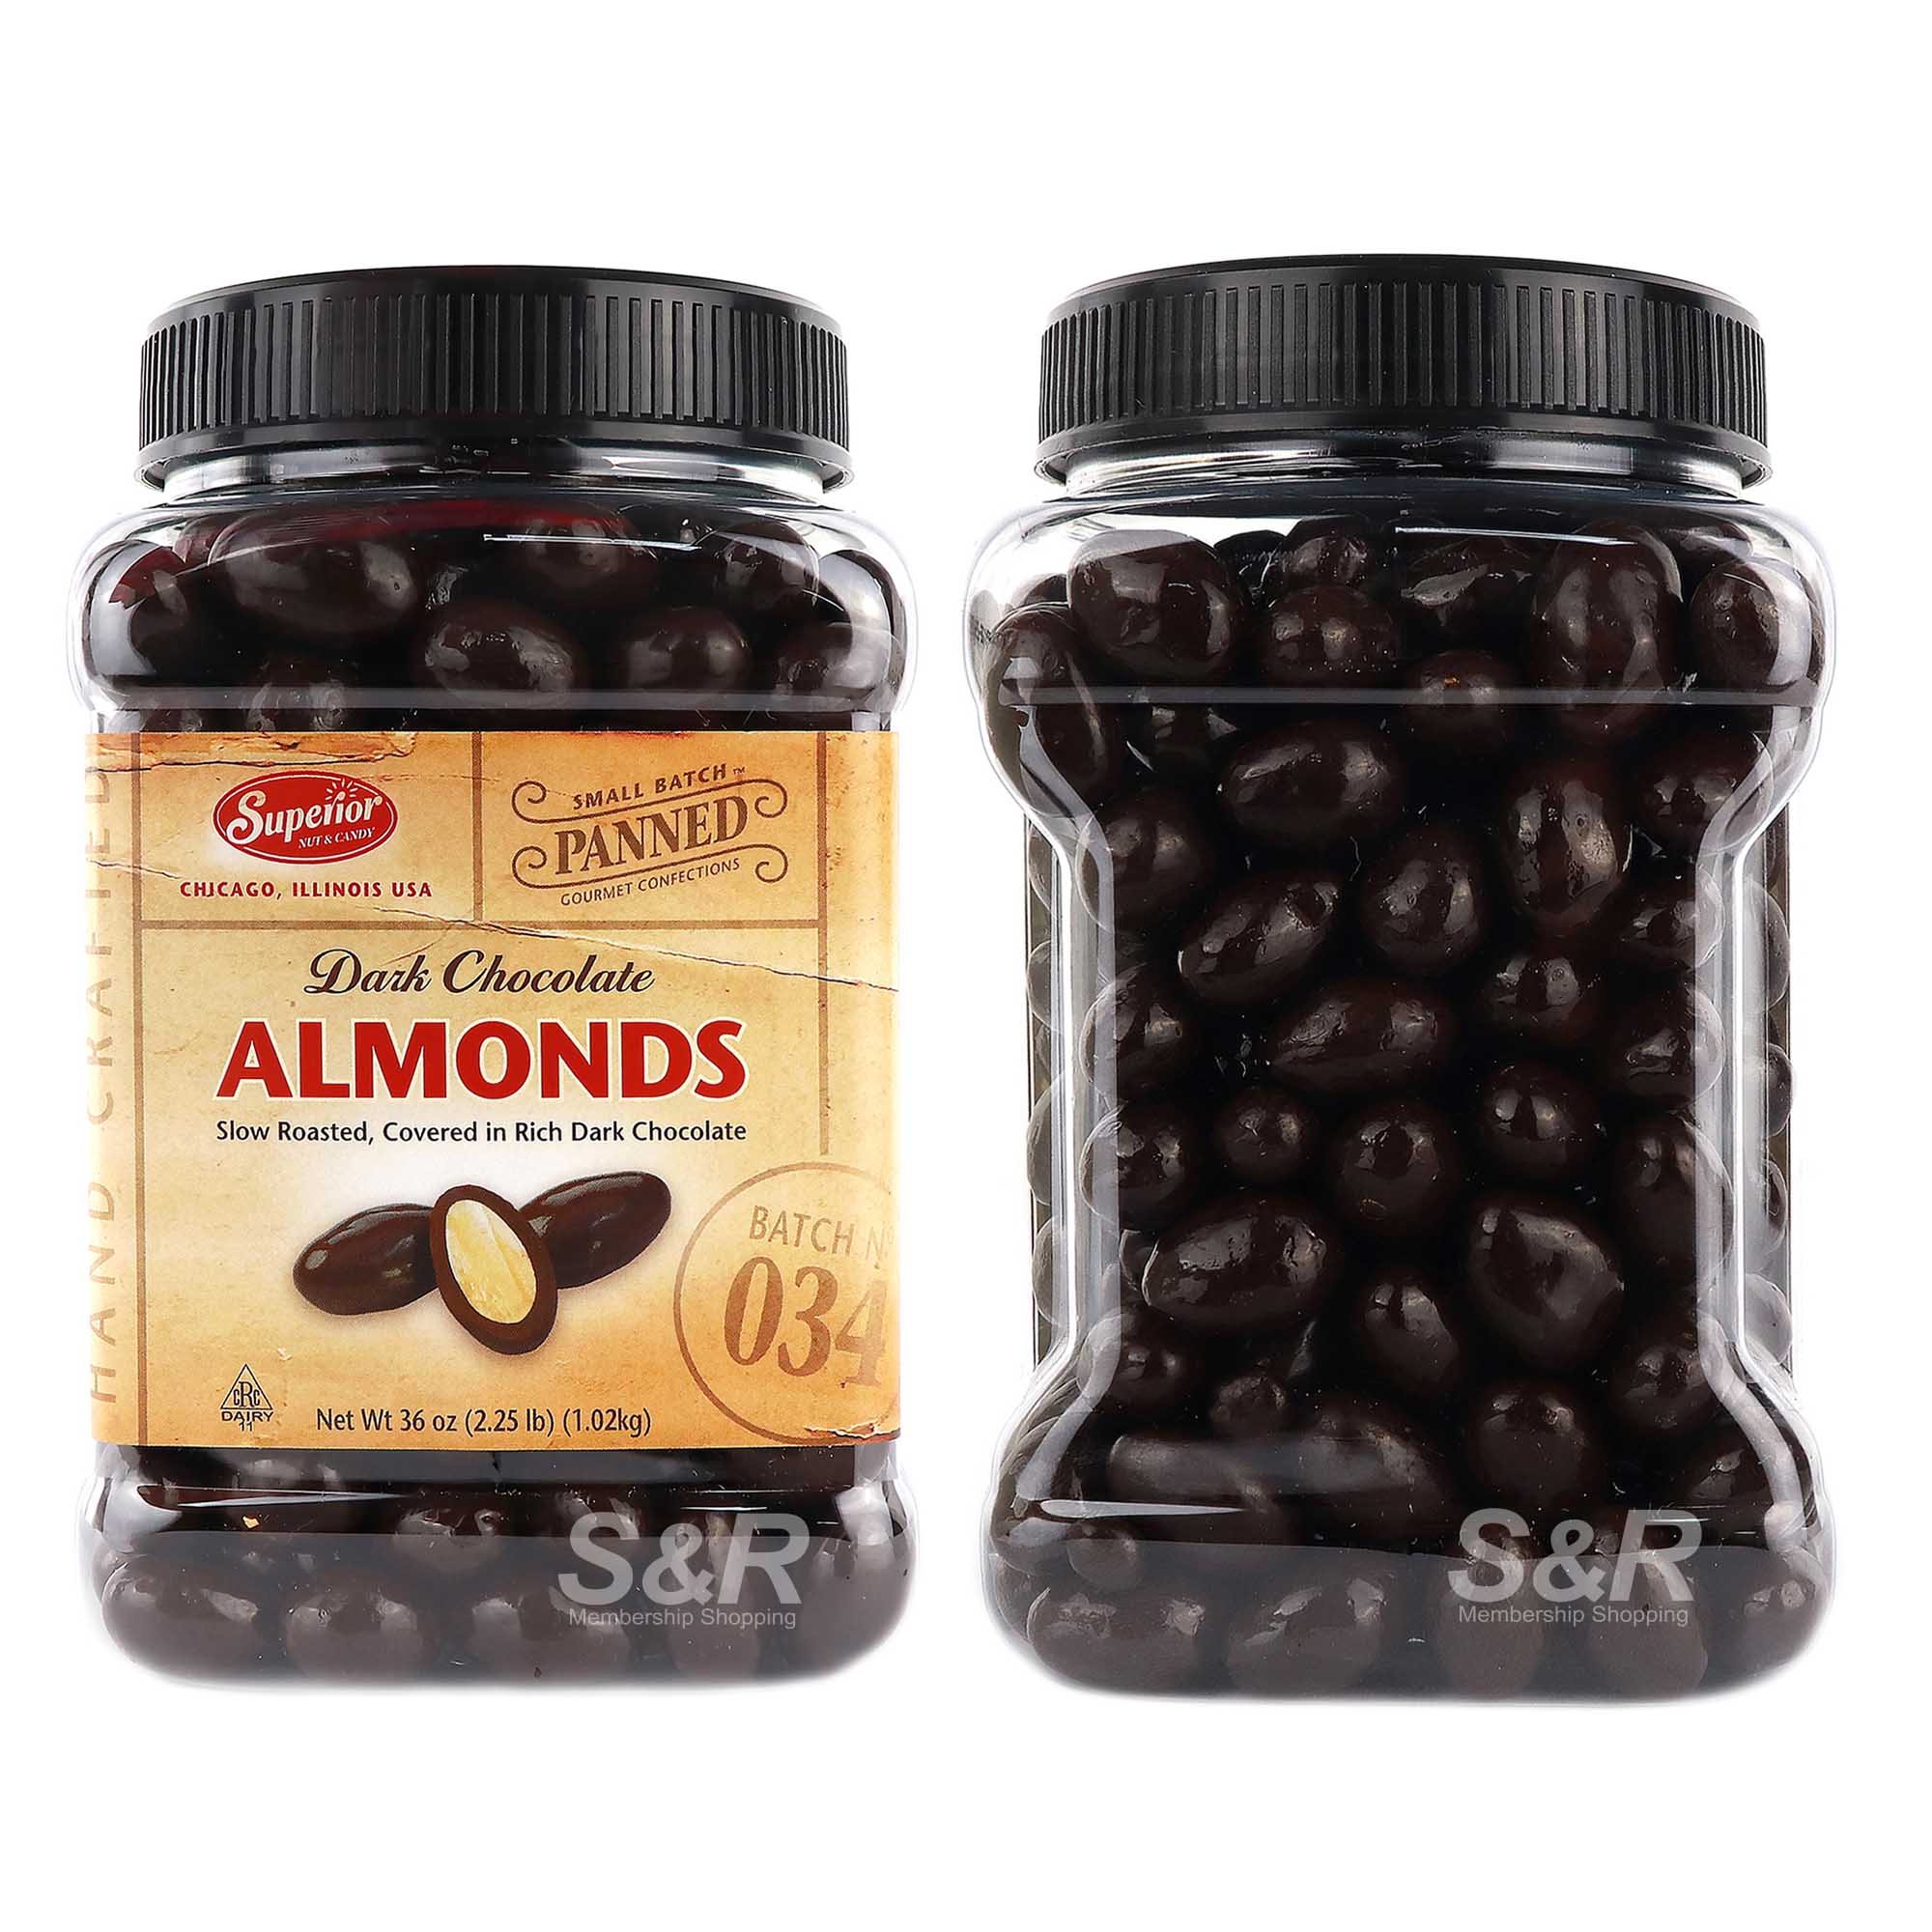 Dark Chocolate Coated Almonds